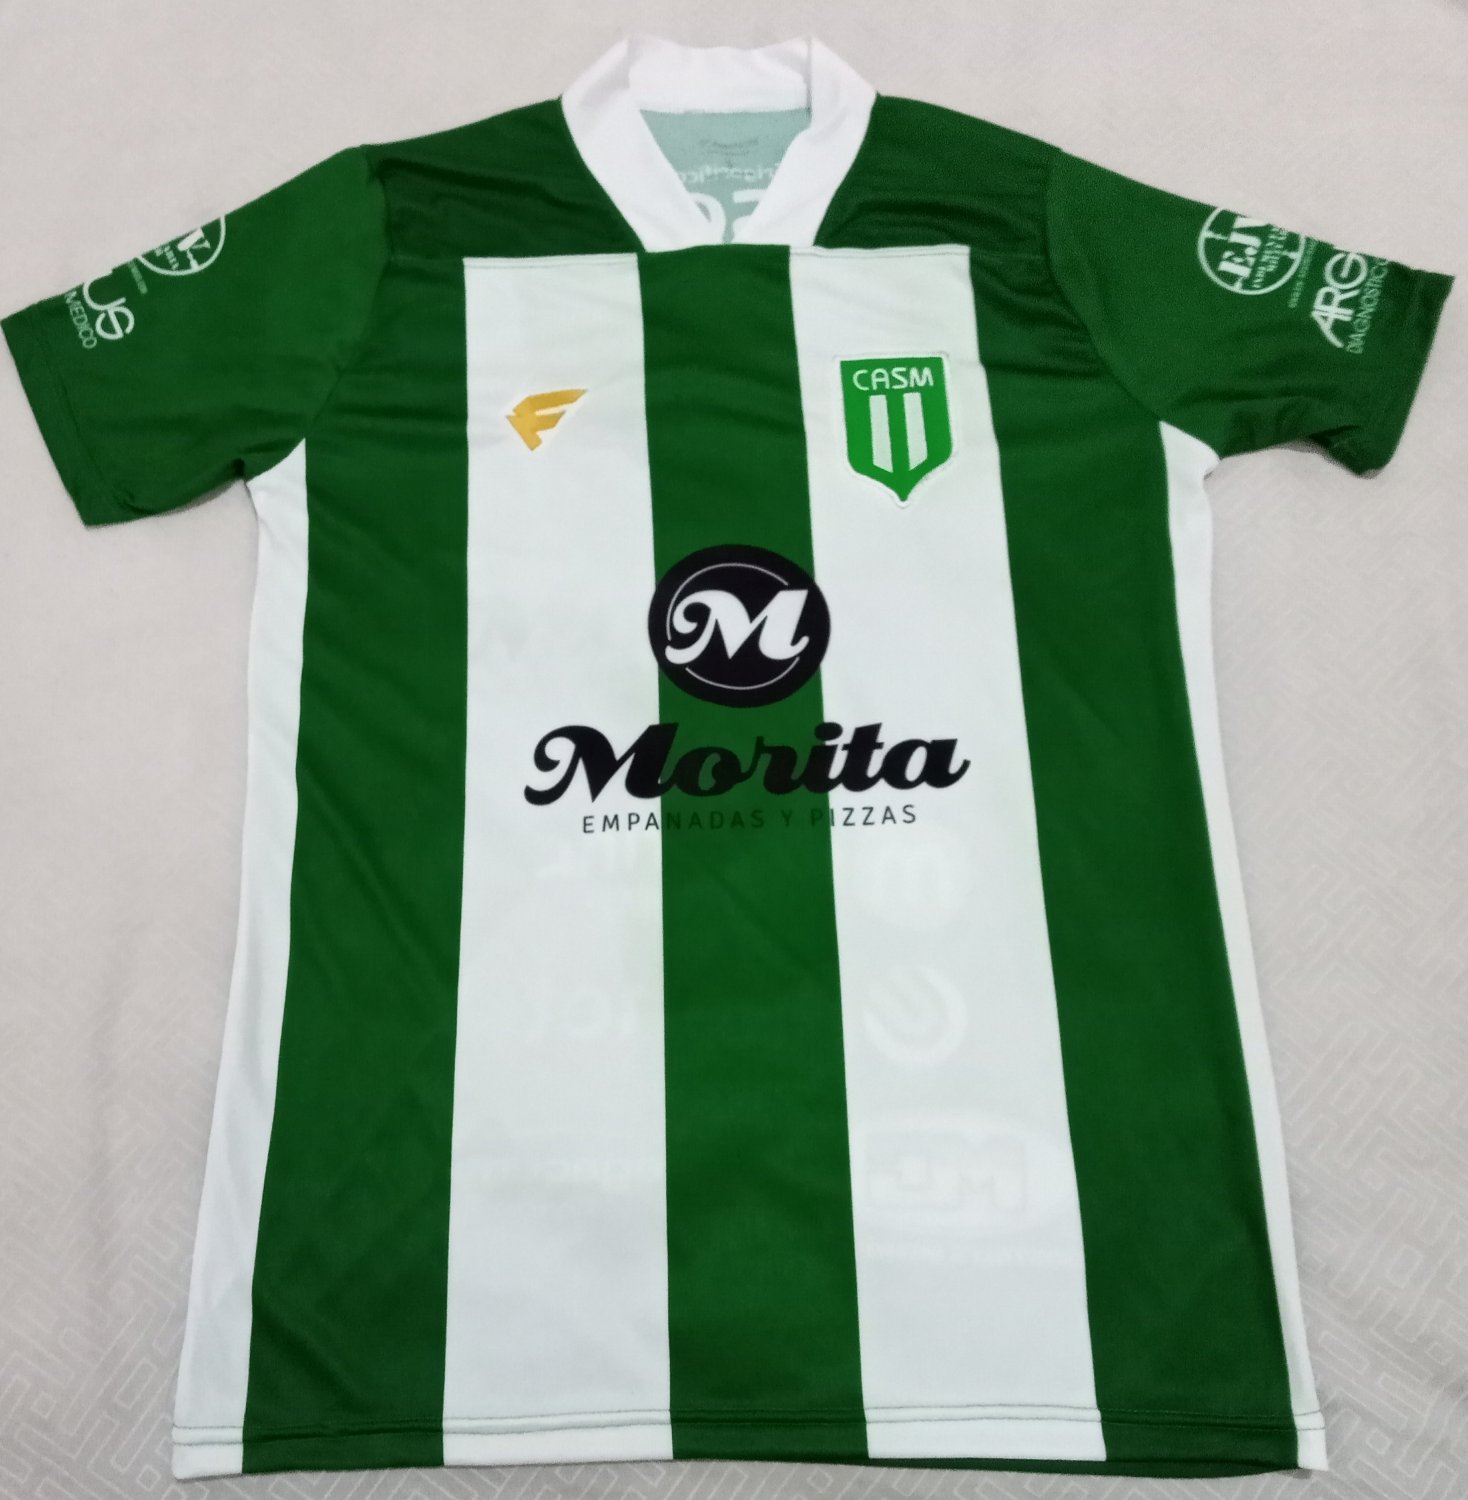 Club Atletico San Miguel Home football shirt 2021. Sponsored by Morita